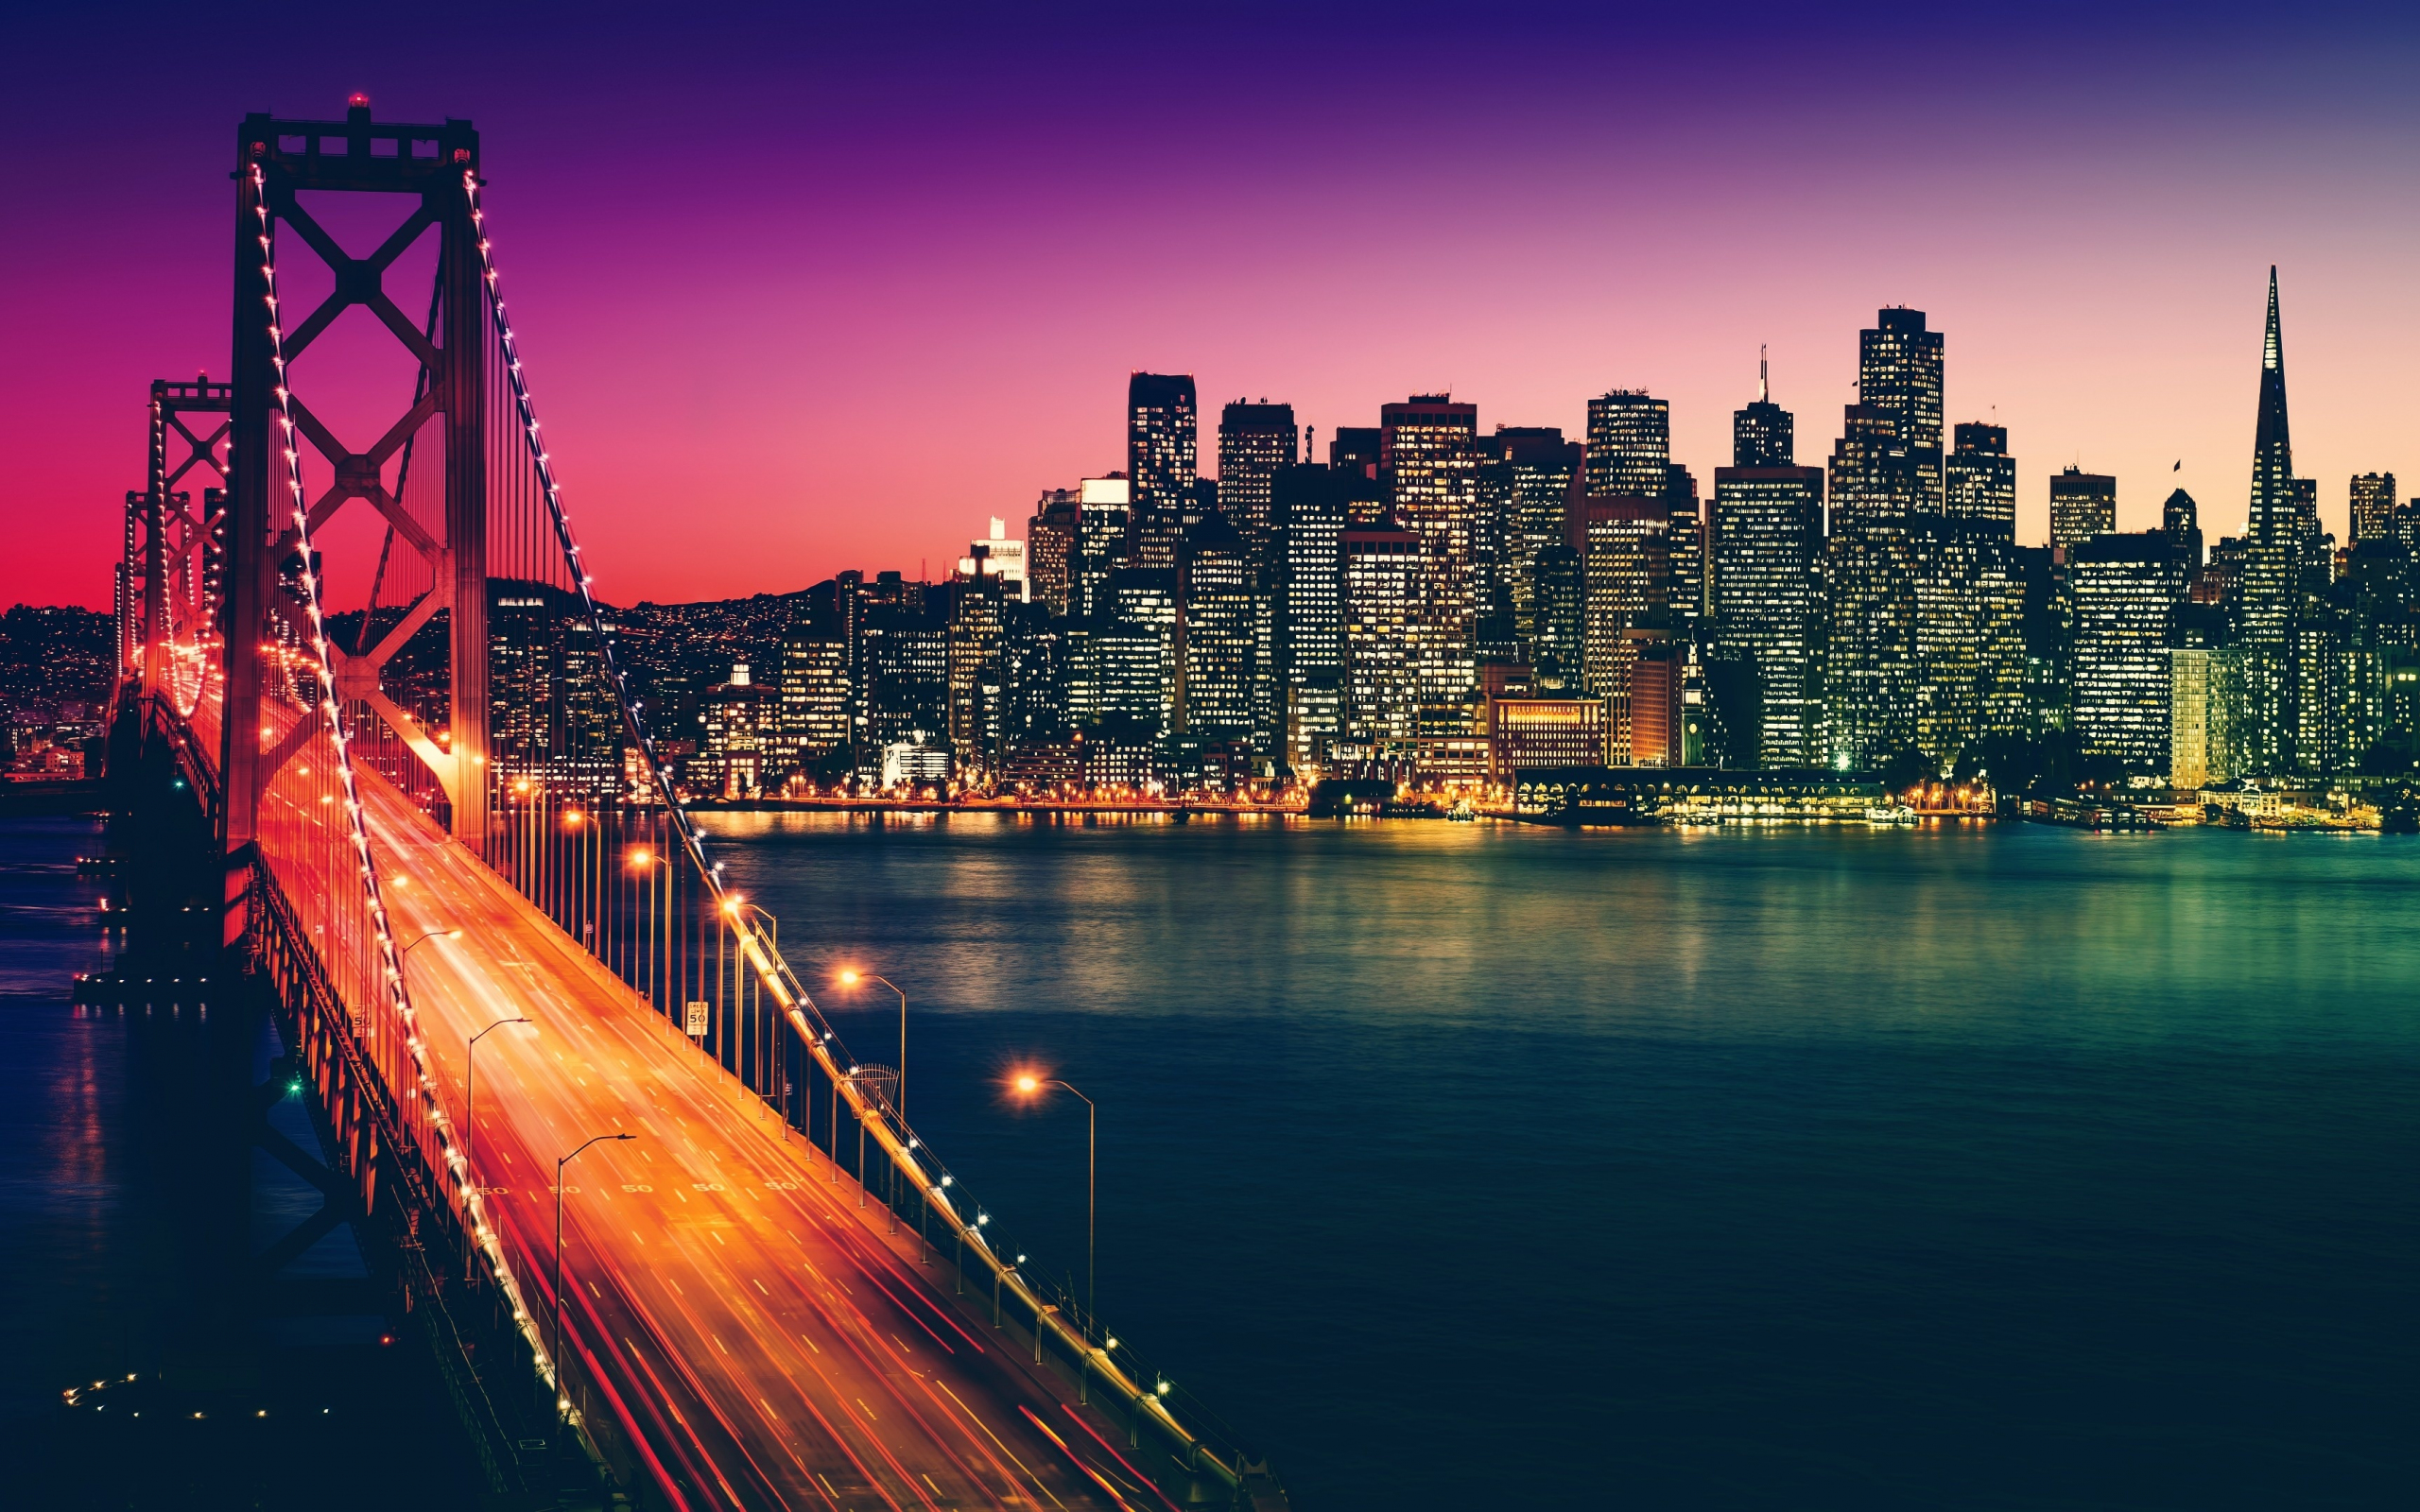 Download 2560x1600 Wallpaper San Francisco City Buildings Bridge Night Dual Wide Widescreen 16 10 Widescreen 2560x1600 Hd Image Background 5556